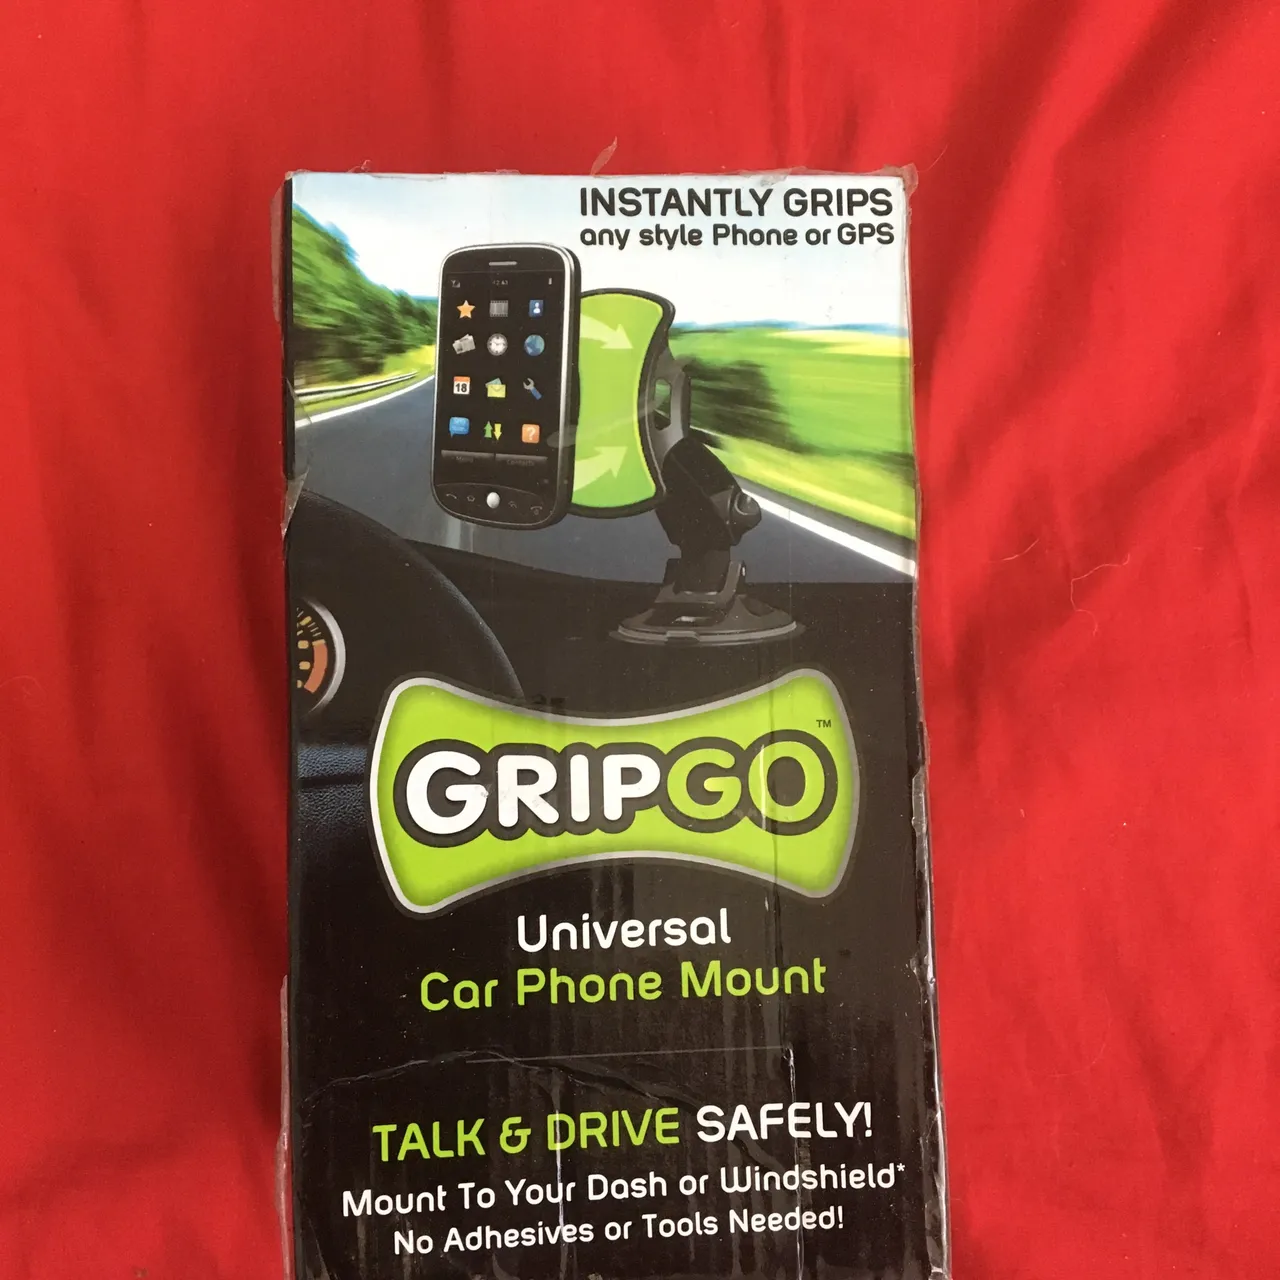 Grip go car phone mount photo 1